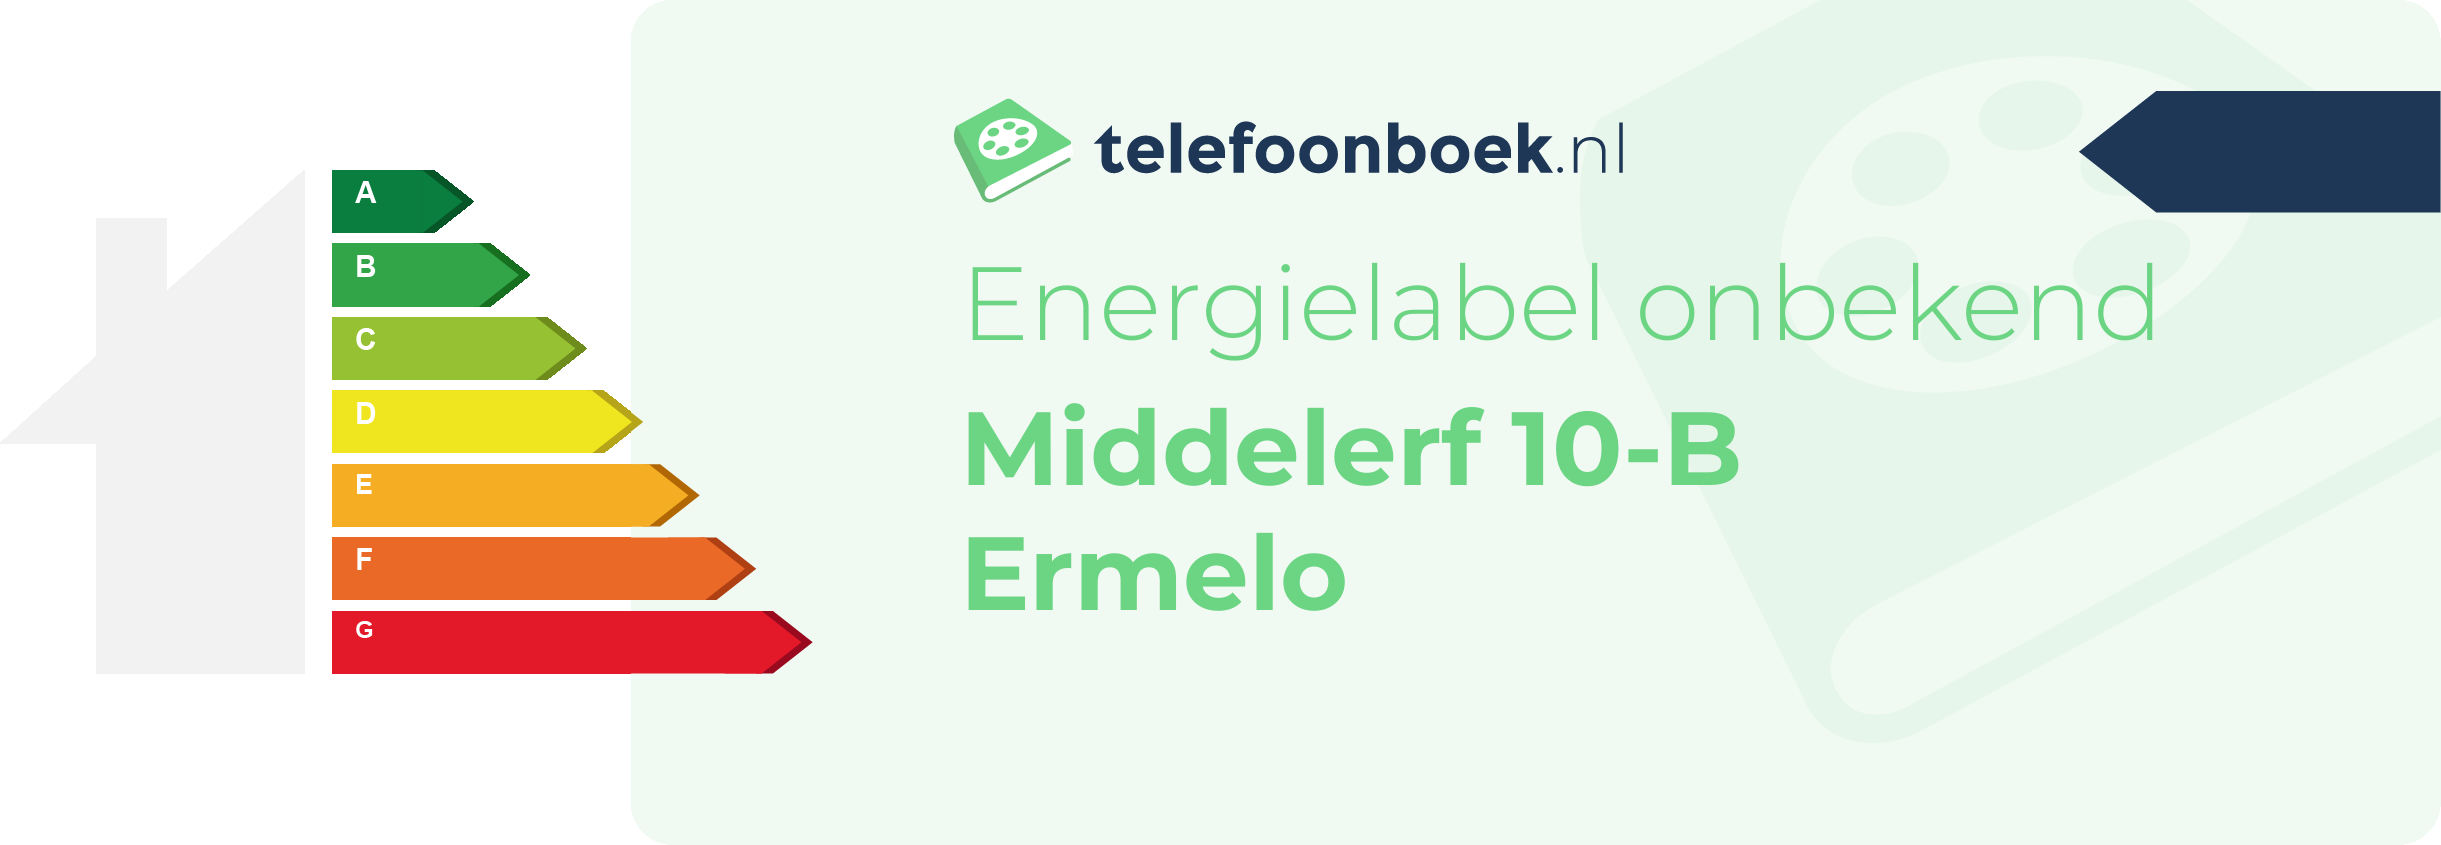 Energielabel Middelerf 10-B Ermelo